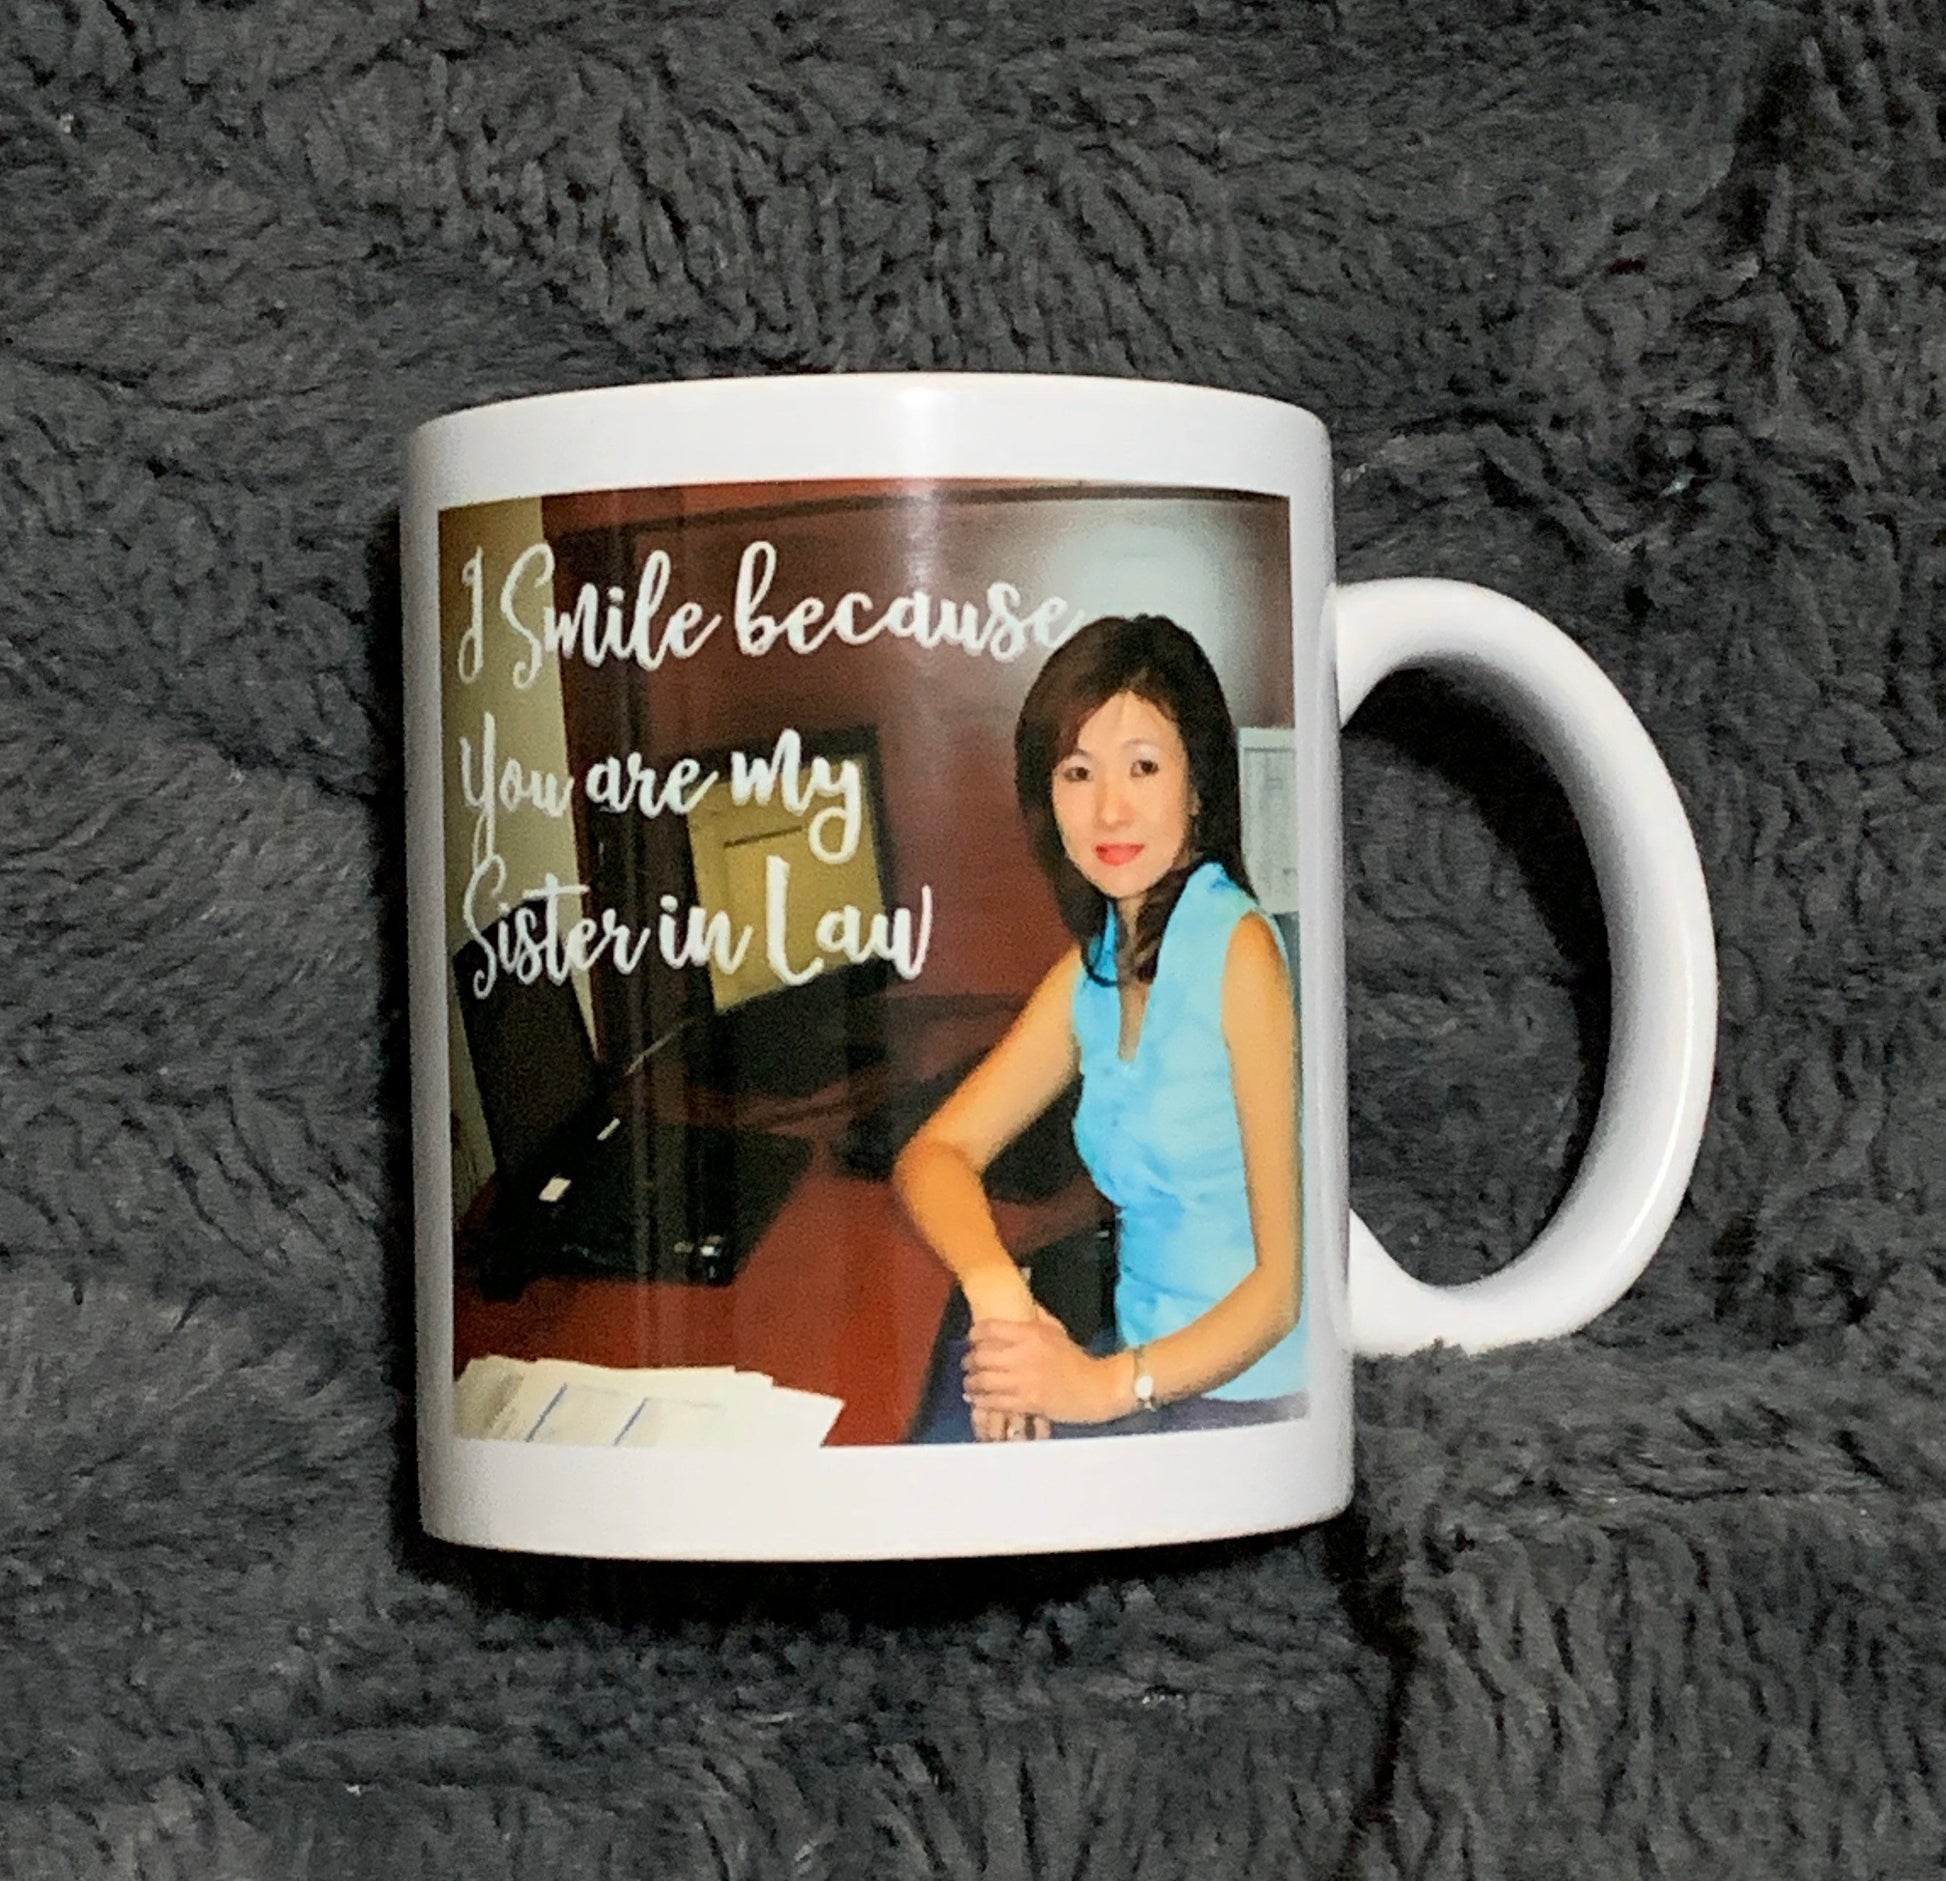 Custom Photo Mug Unique Gifts for Dad - 11 oz. - Busybee Creates